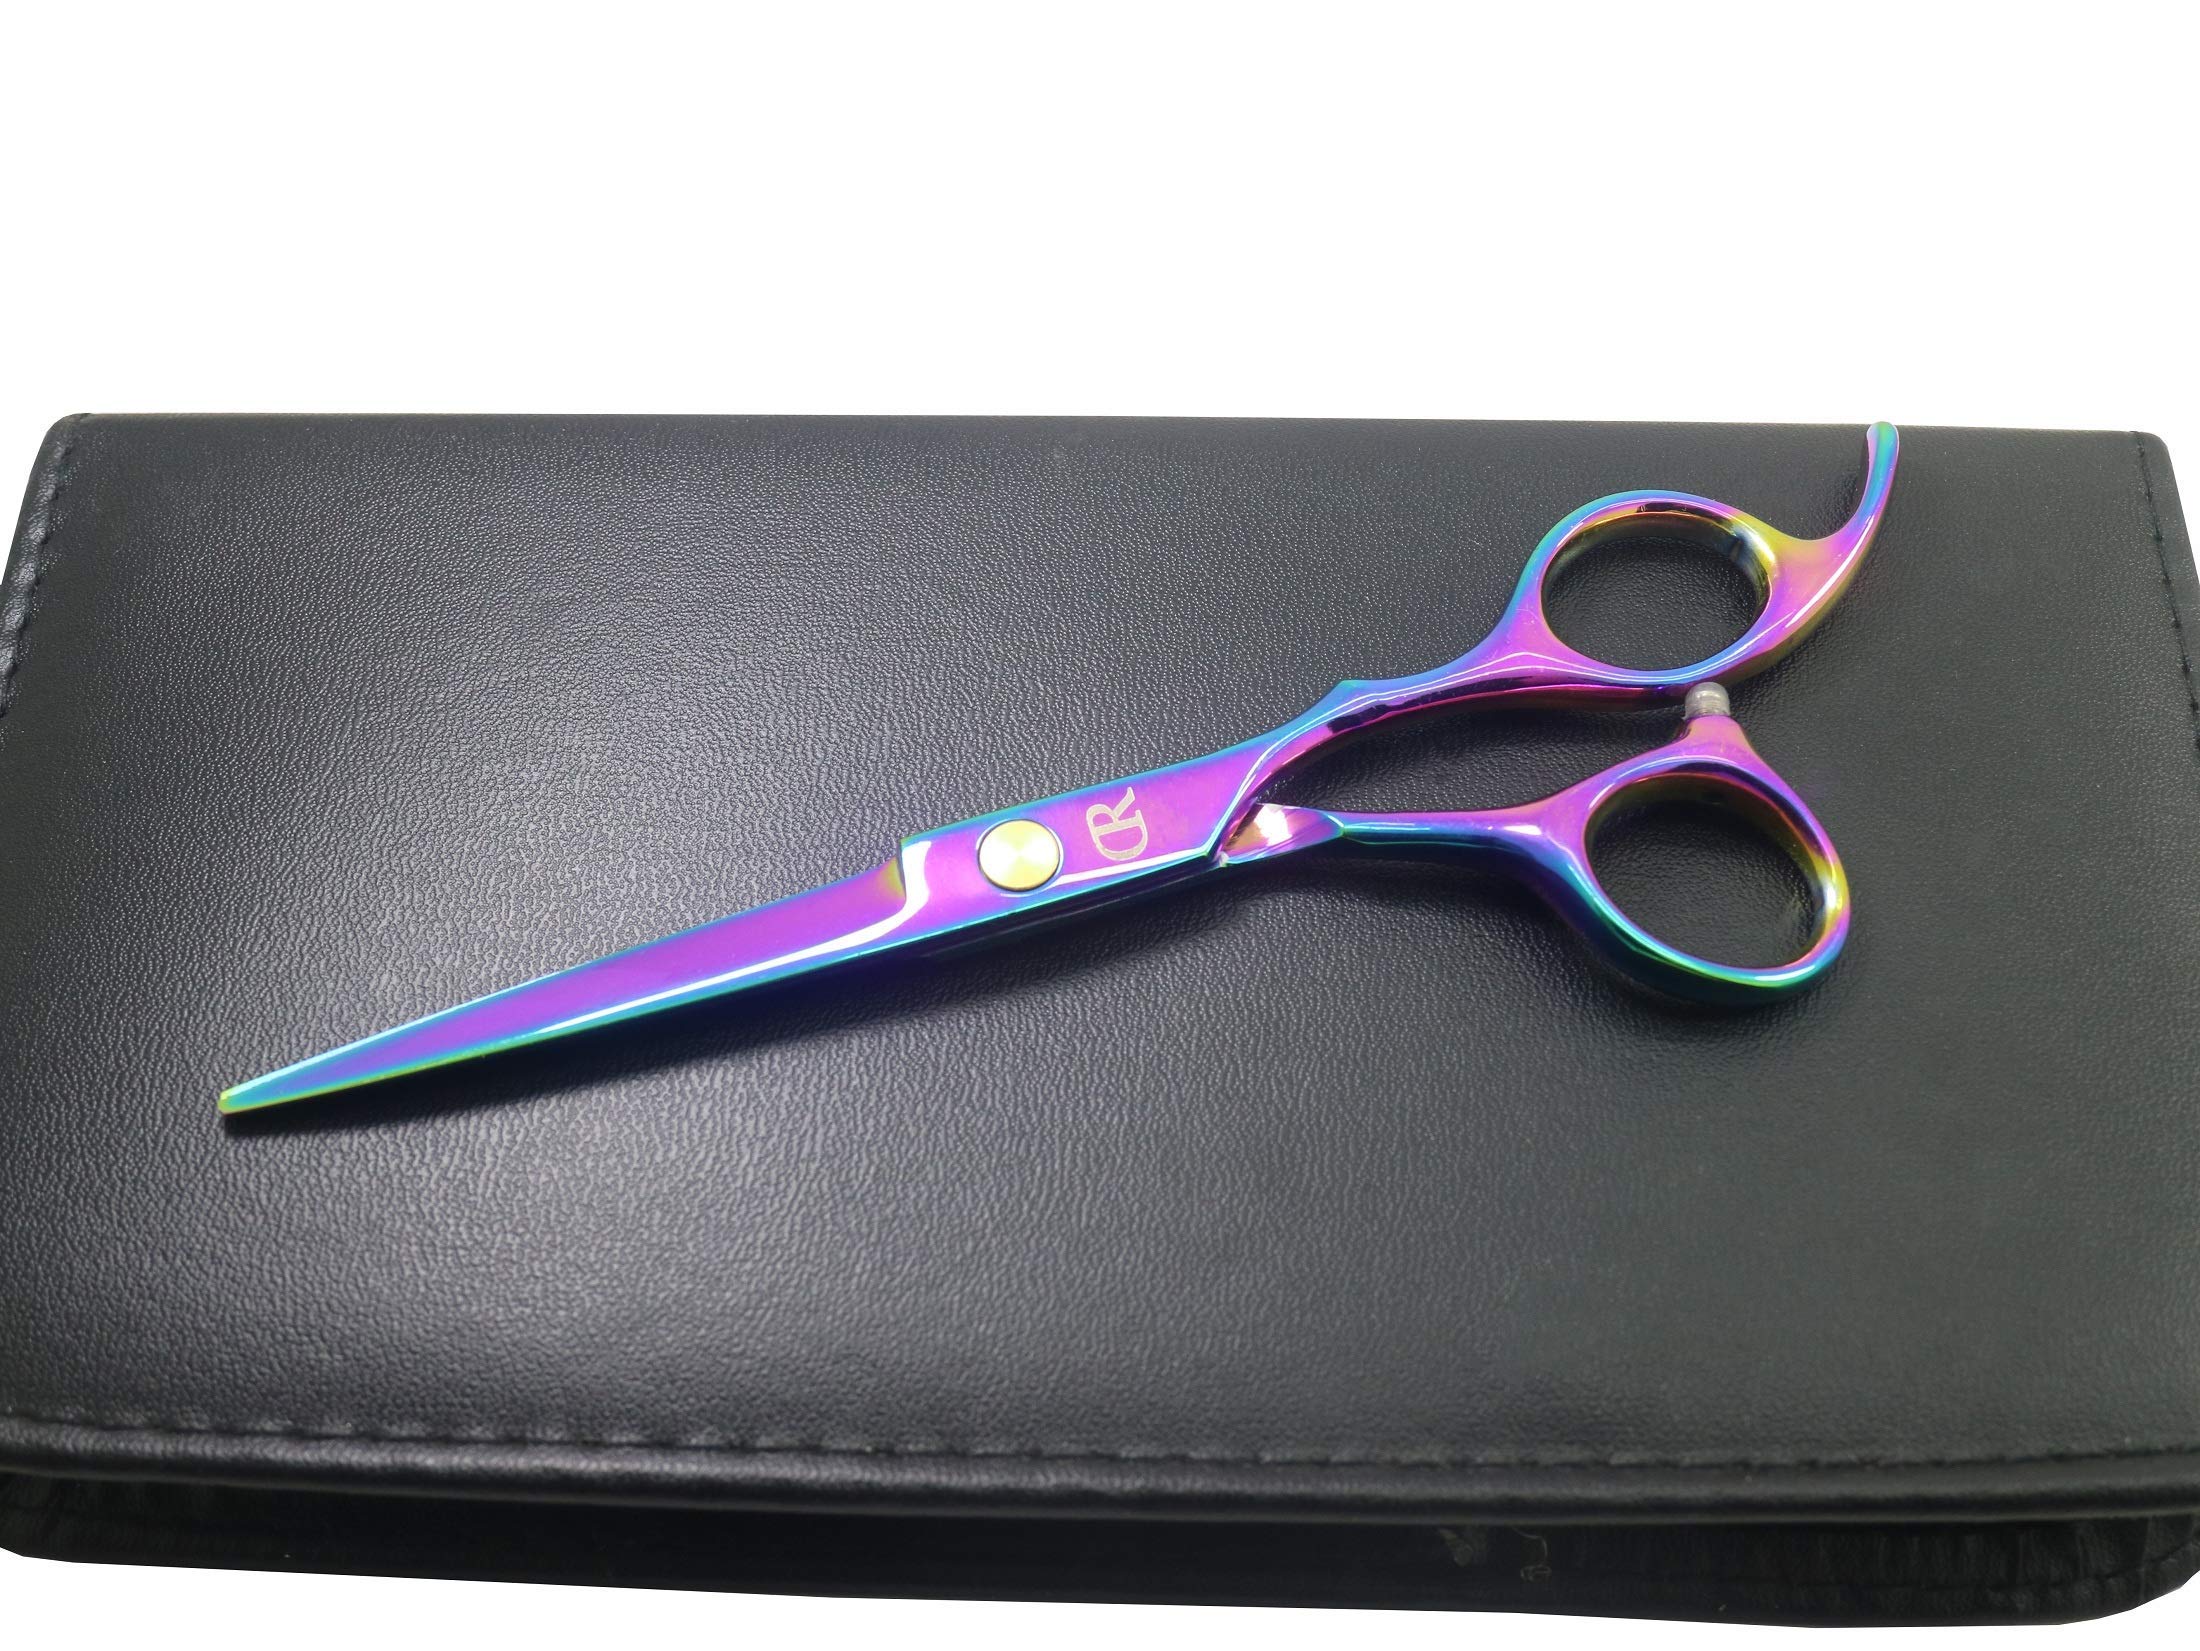 Professional Hair Cutting Shears,6 Inch Barber hair Cutting Scissors Sharp Blades Hairdresser Haircut For Women/Men/kids 420c Stainless Steel Rainbow Color (A) (A)